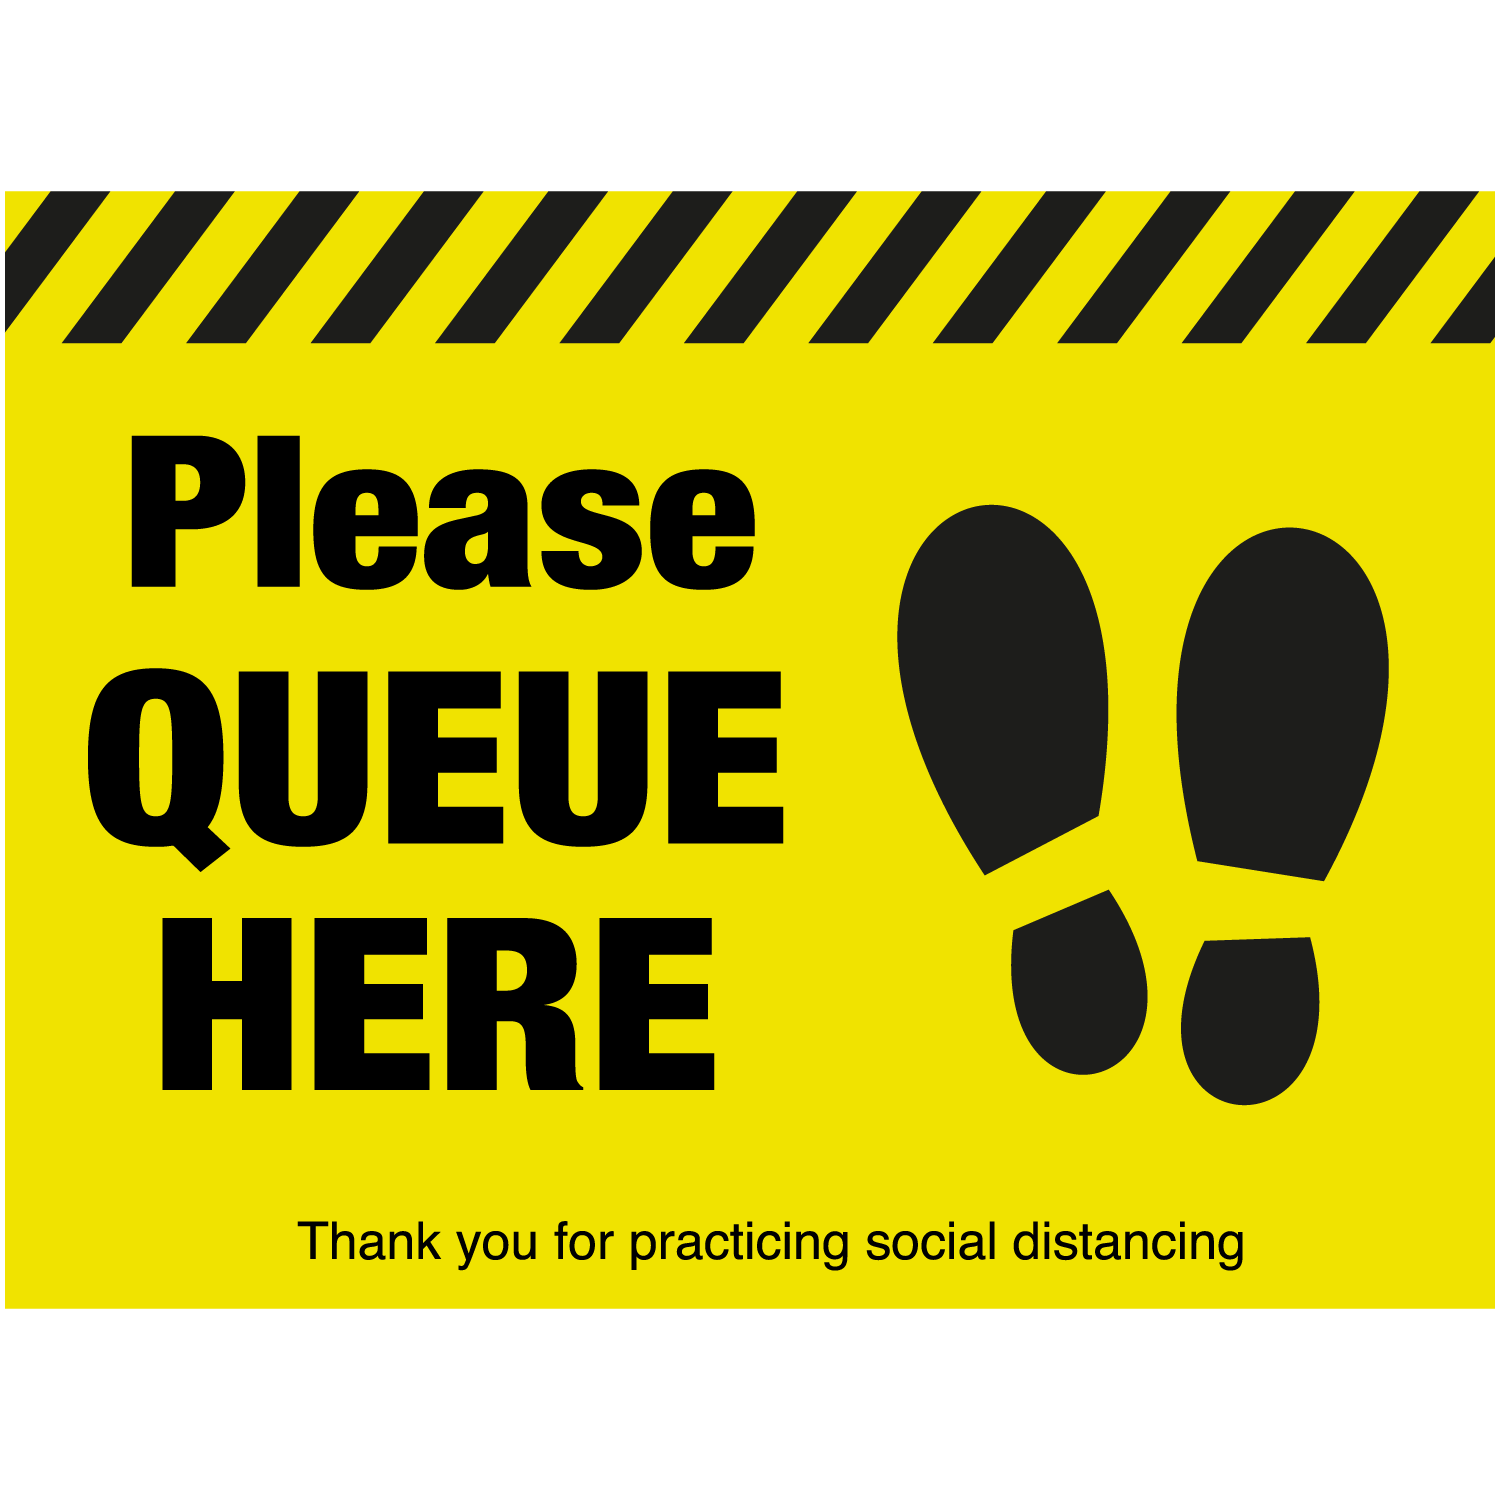 Please queue here with symbol distancing floor sign